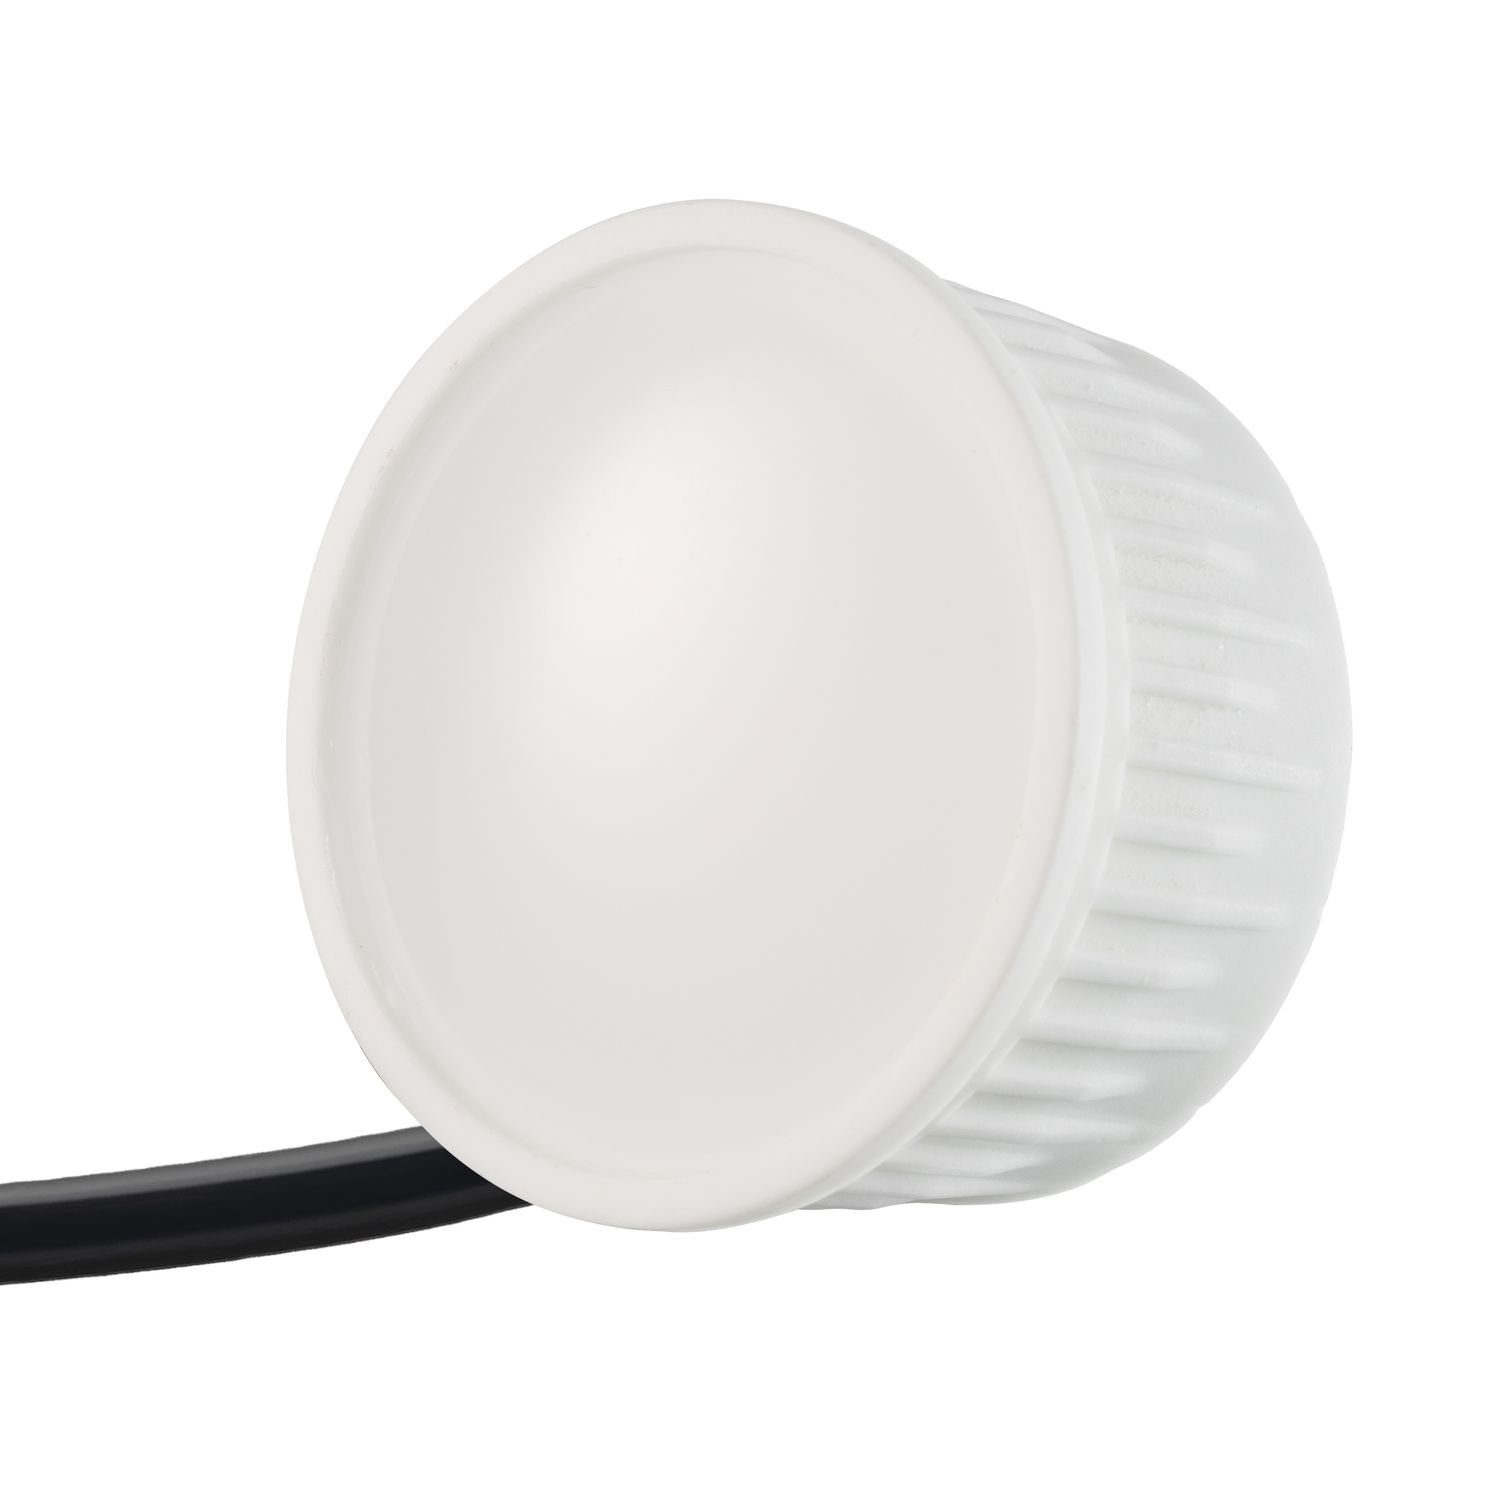 LEDANDO LED Einbaustrahler 10er LED Leuchtmittel extra 5W mit vo Einbaustrahler weiß flach in Set